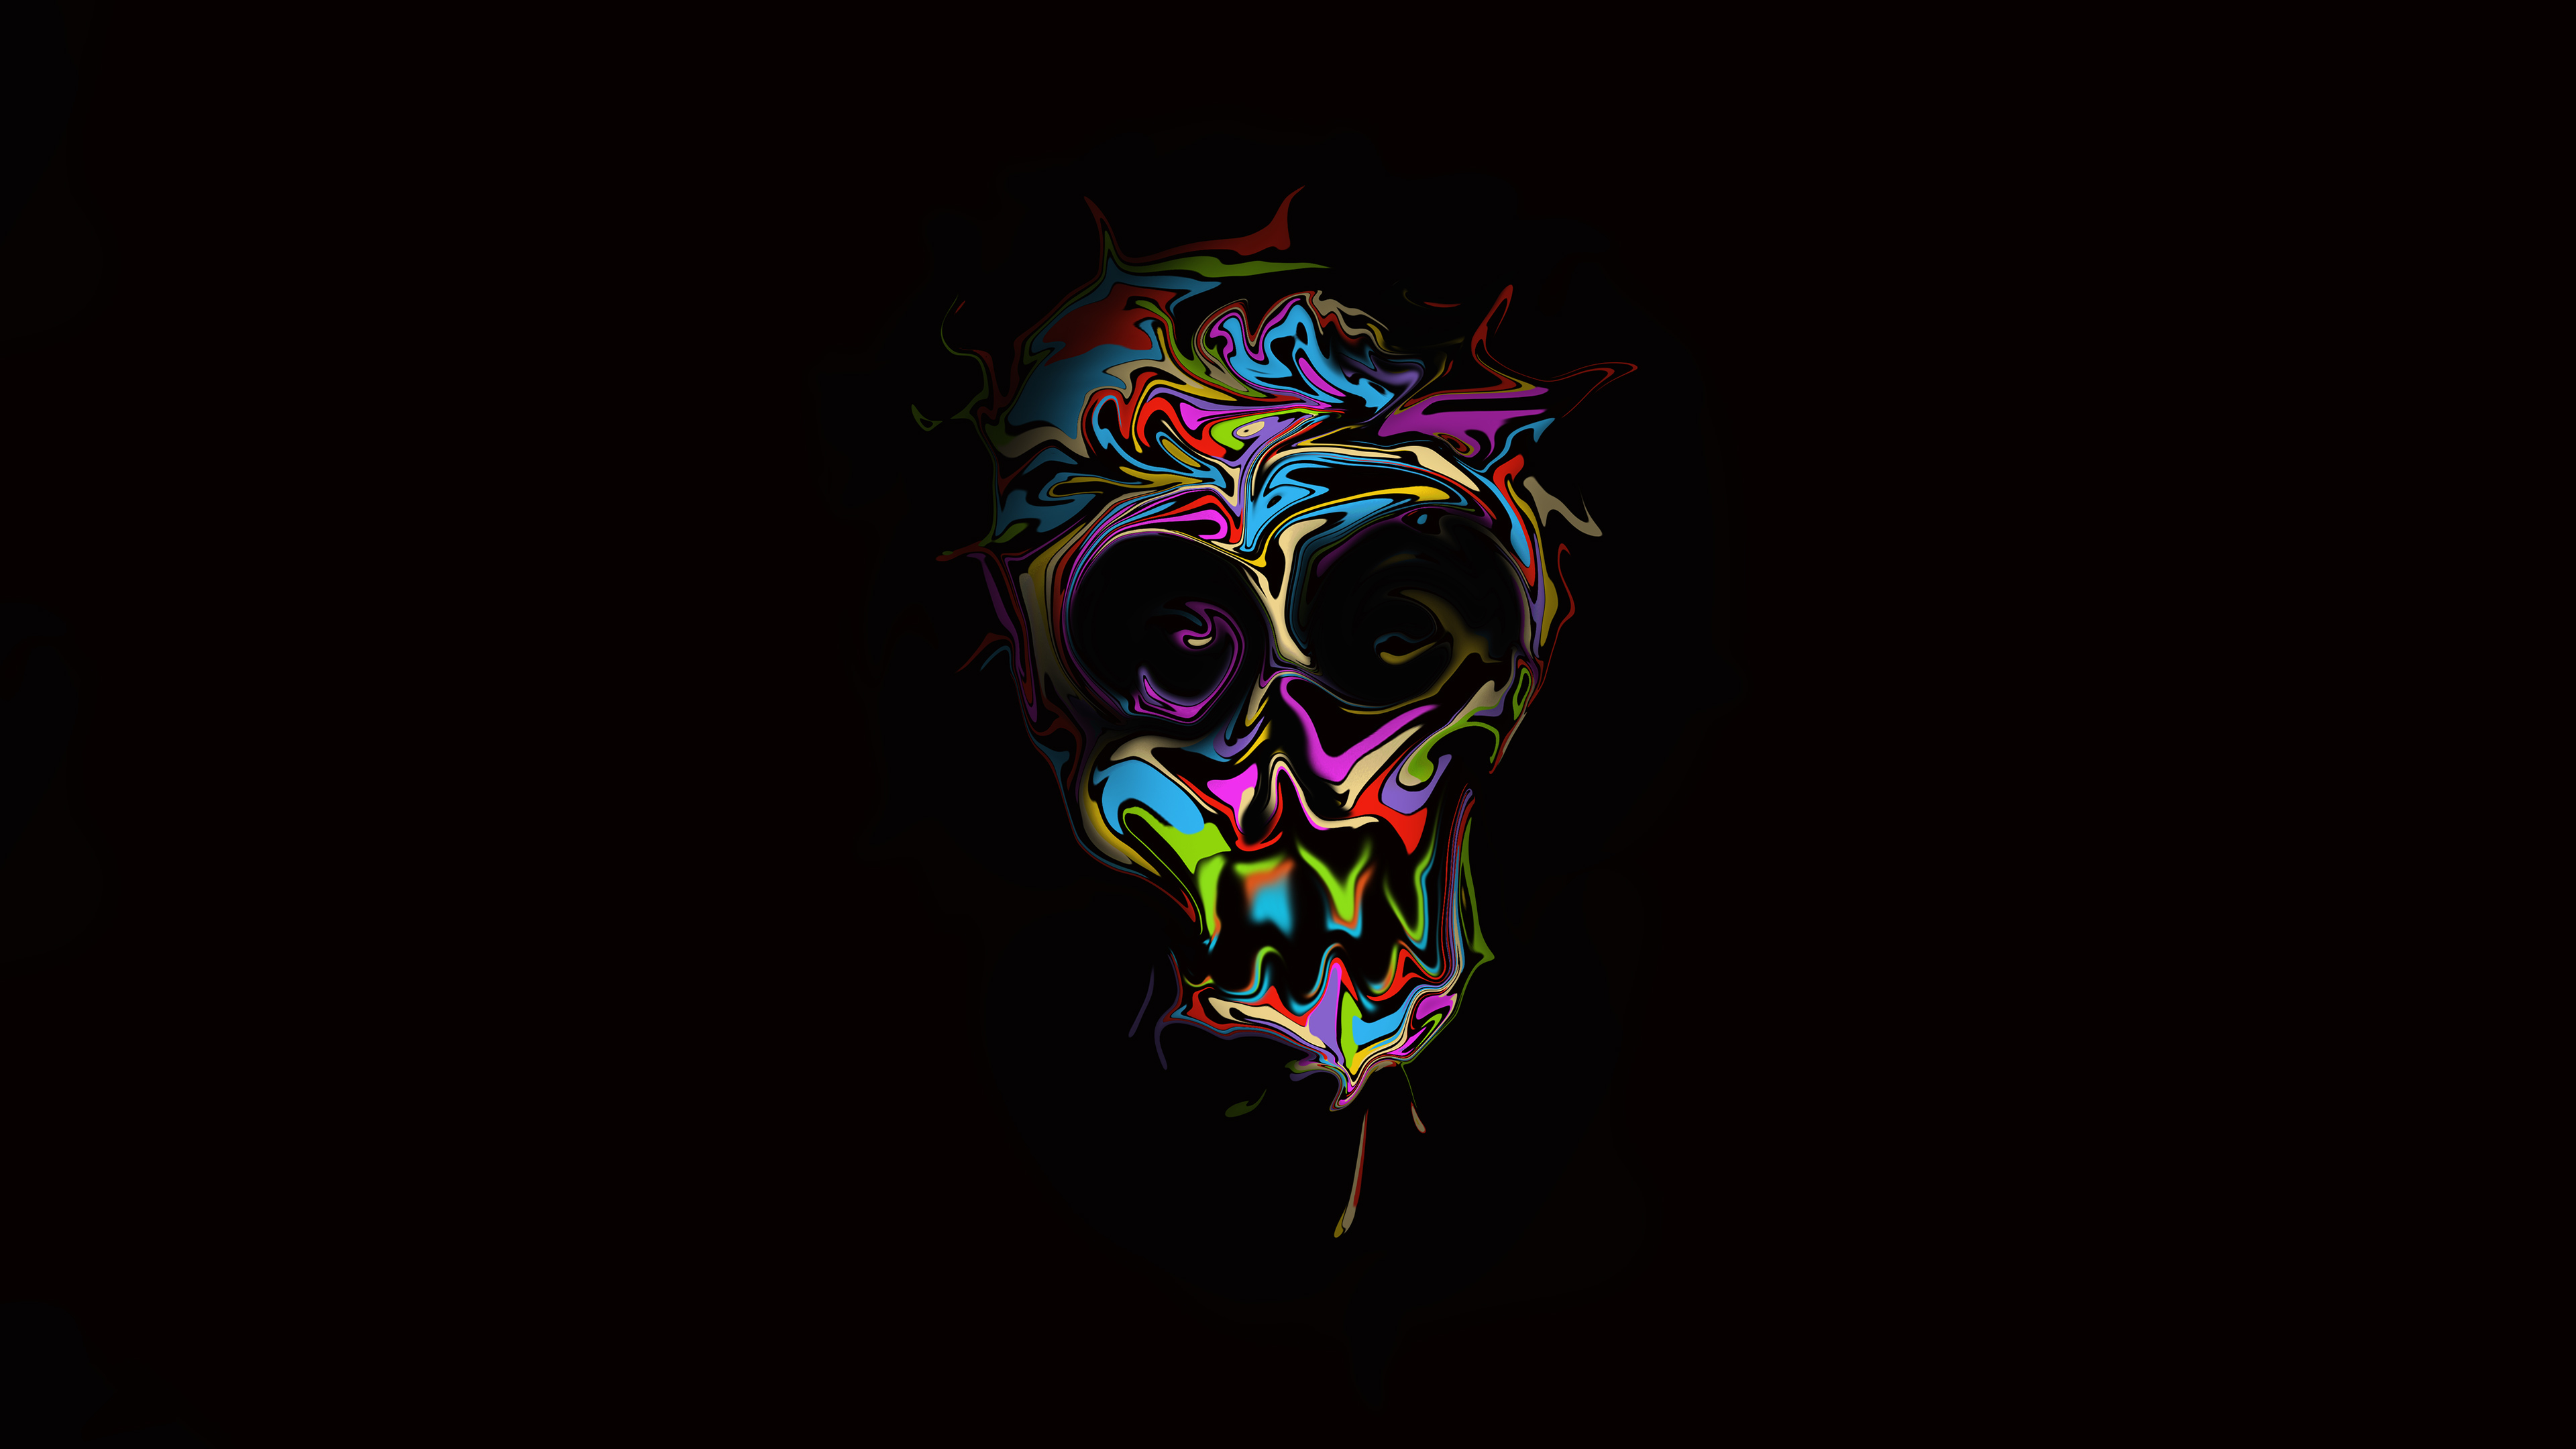 1082222222x1111110 Colorful Skull Art 1082222222x1111110 Resolution